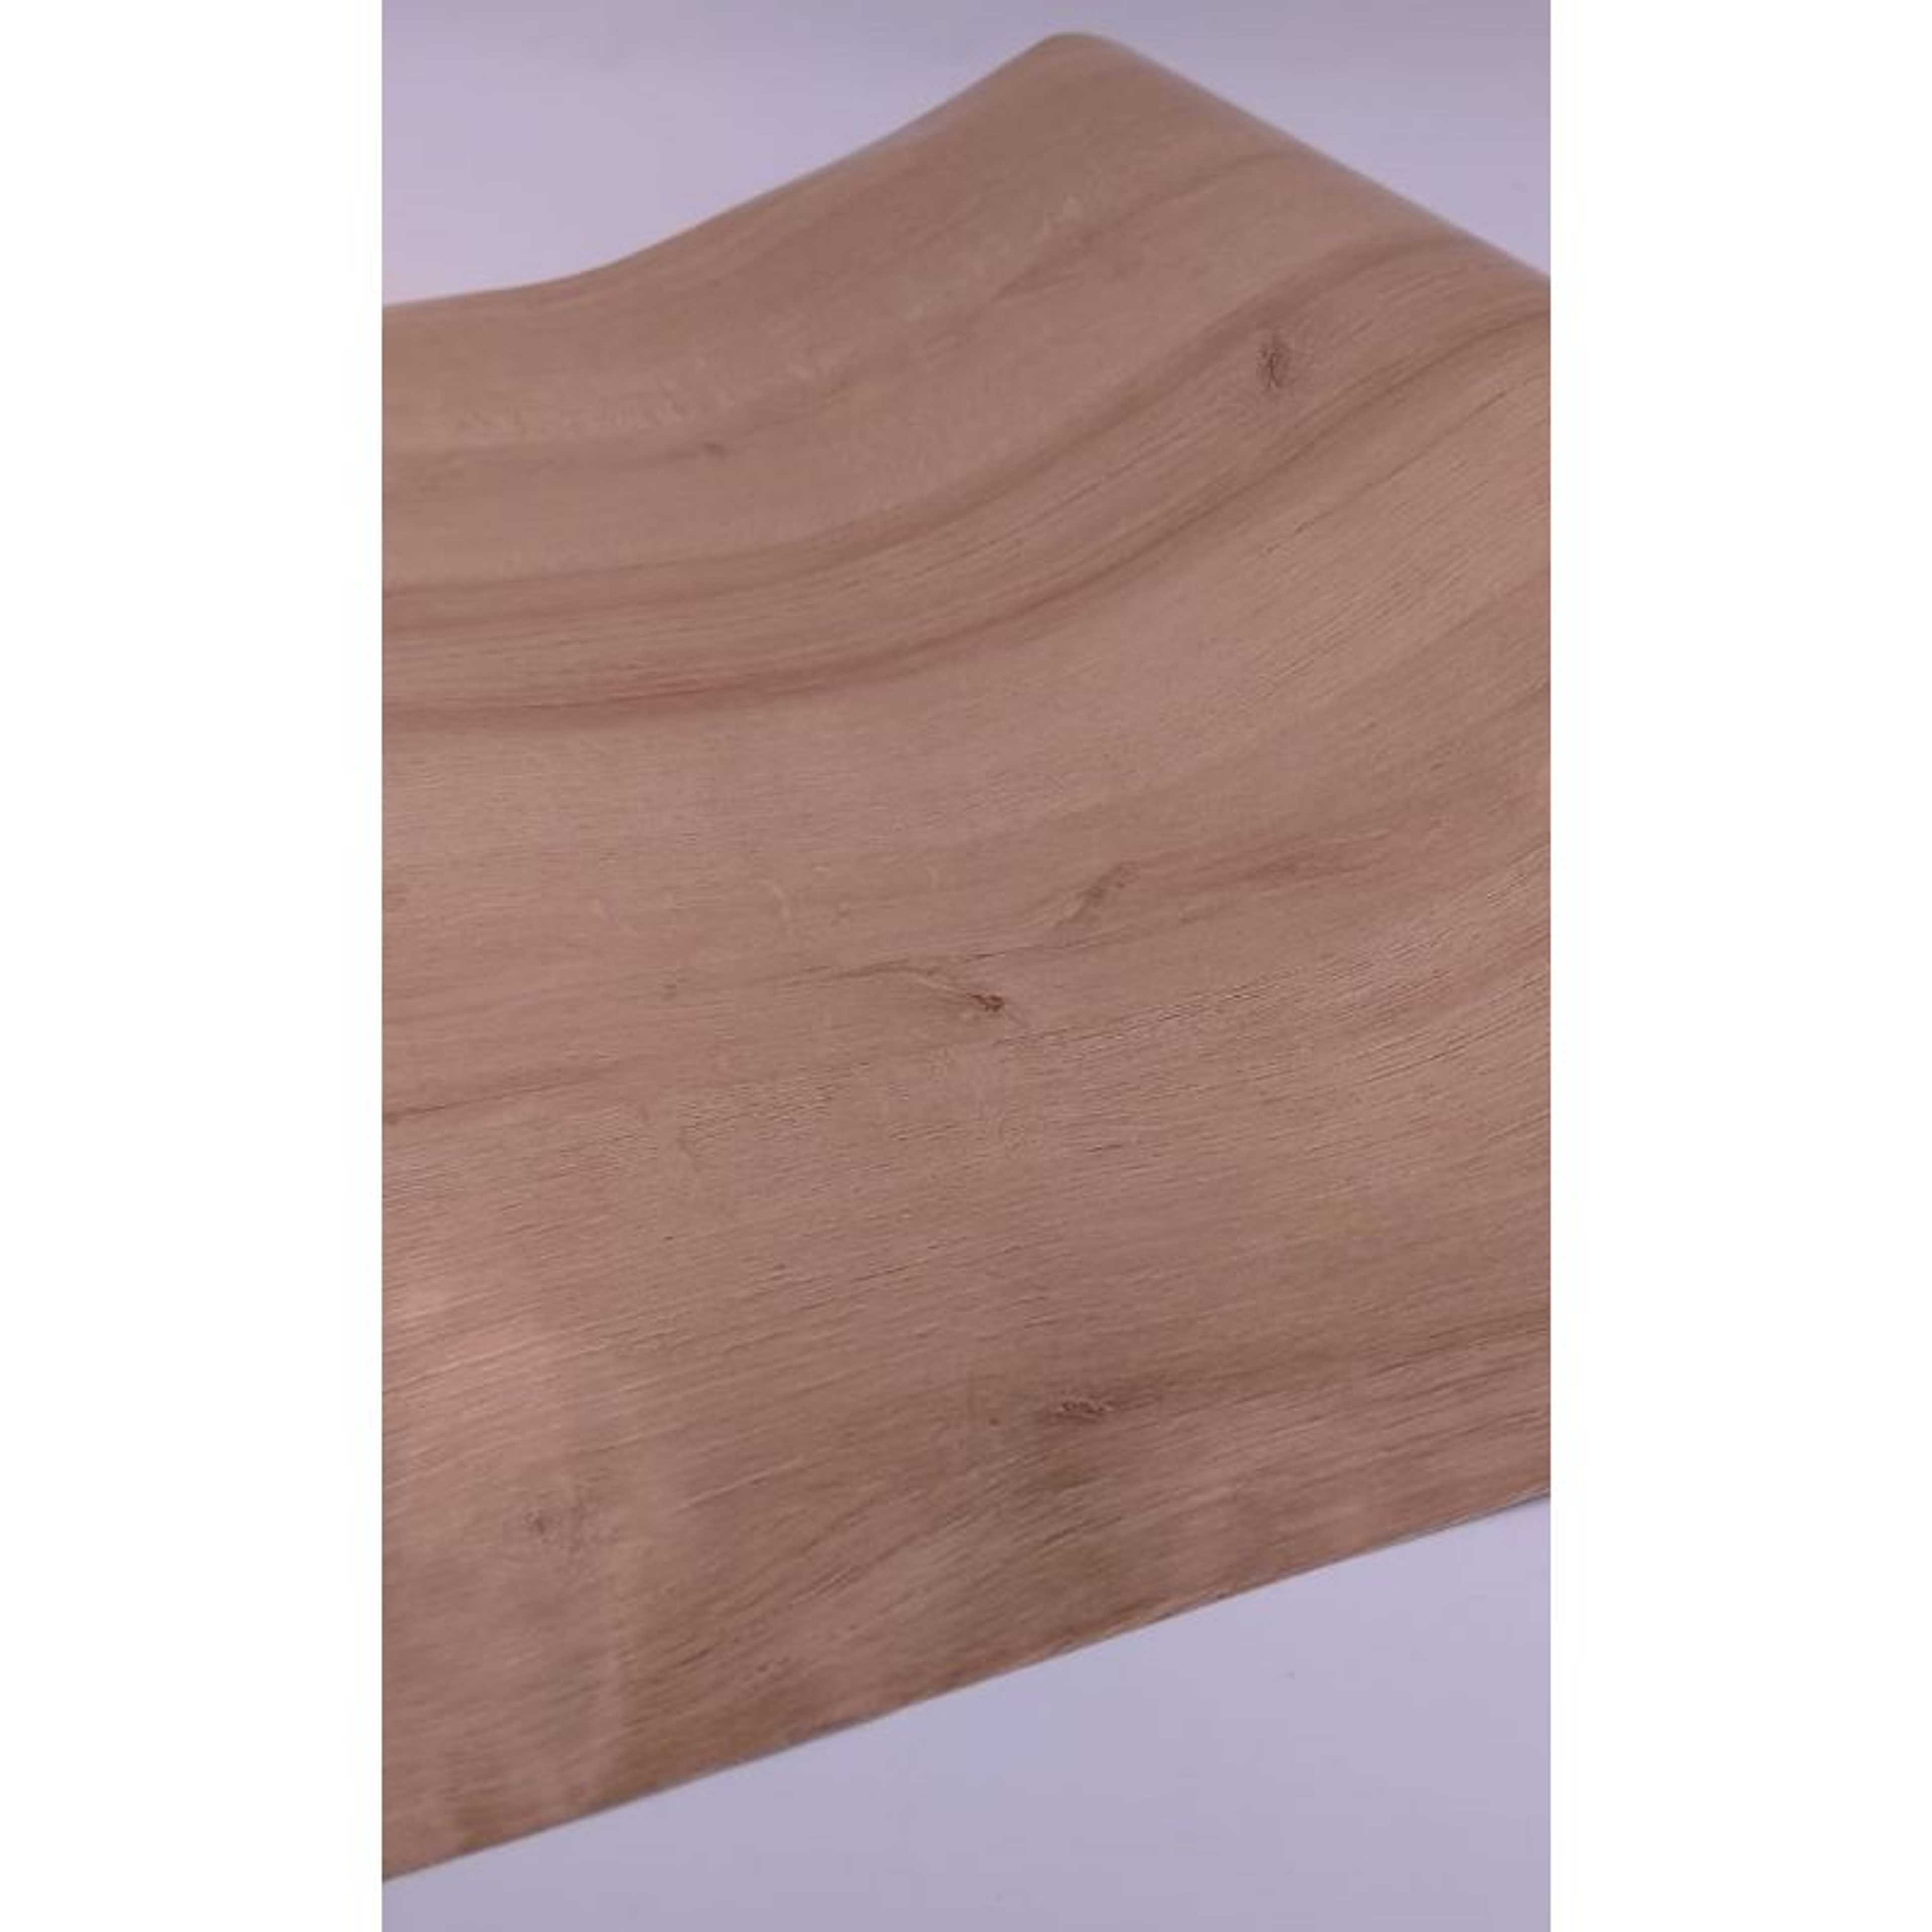 Self Adhesive Wood Grain Furniture Stickers Wallpaper Cabinets Gloss Film - 45x200 cm